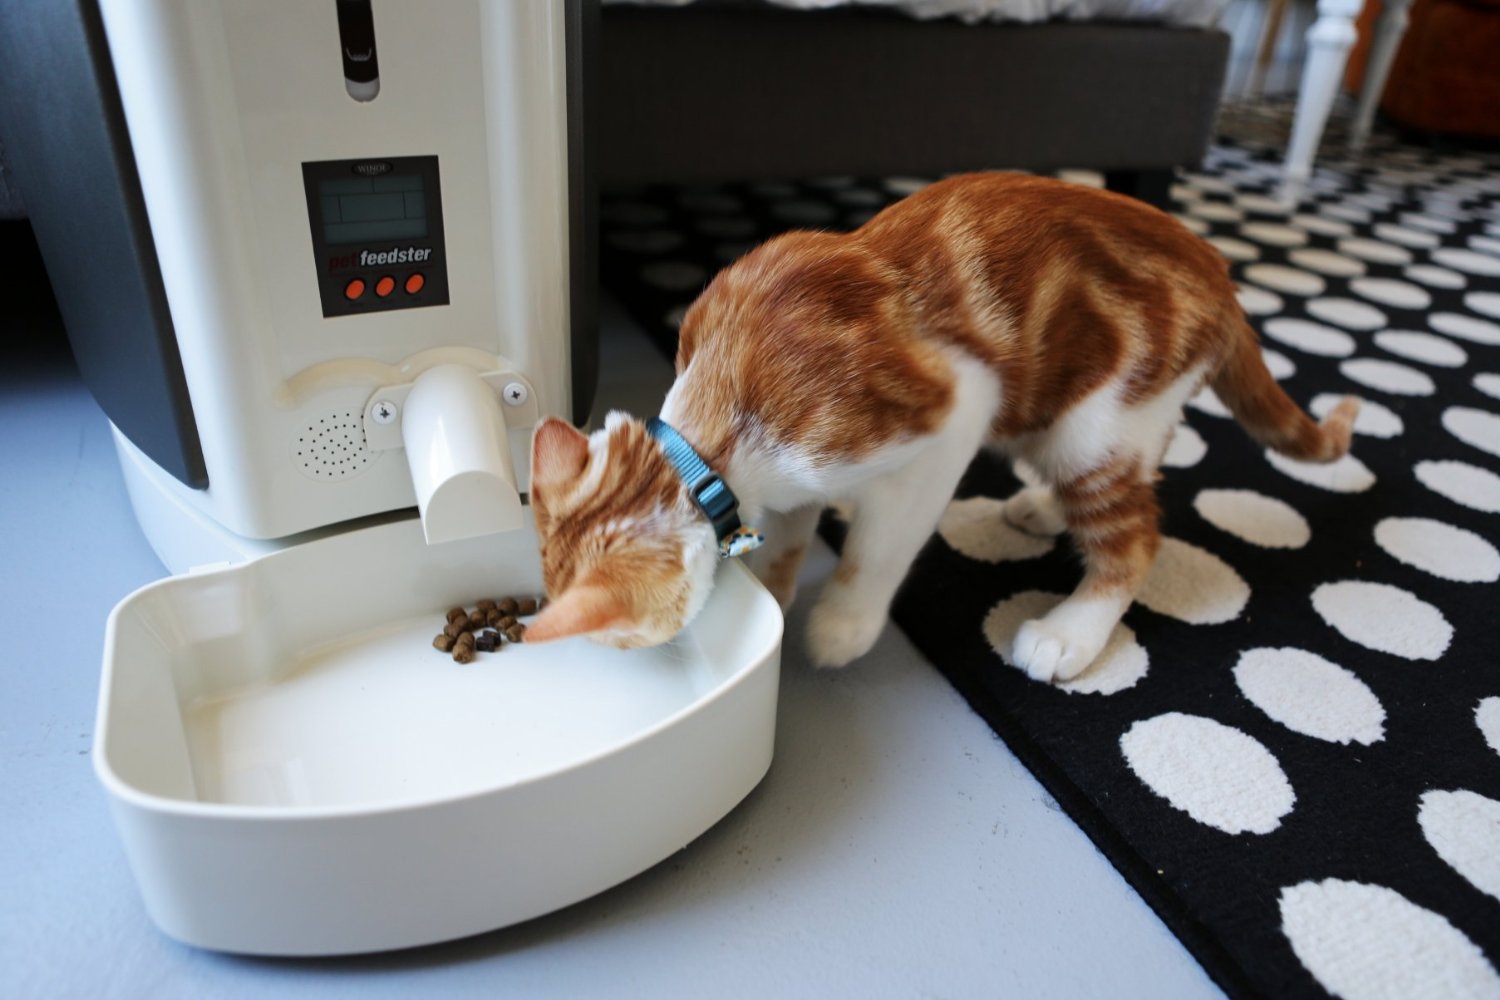 Pet feedster USAF AUtomatic Cat feeder